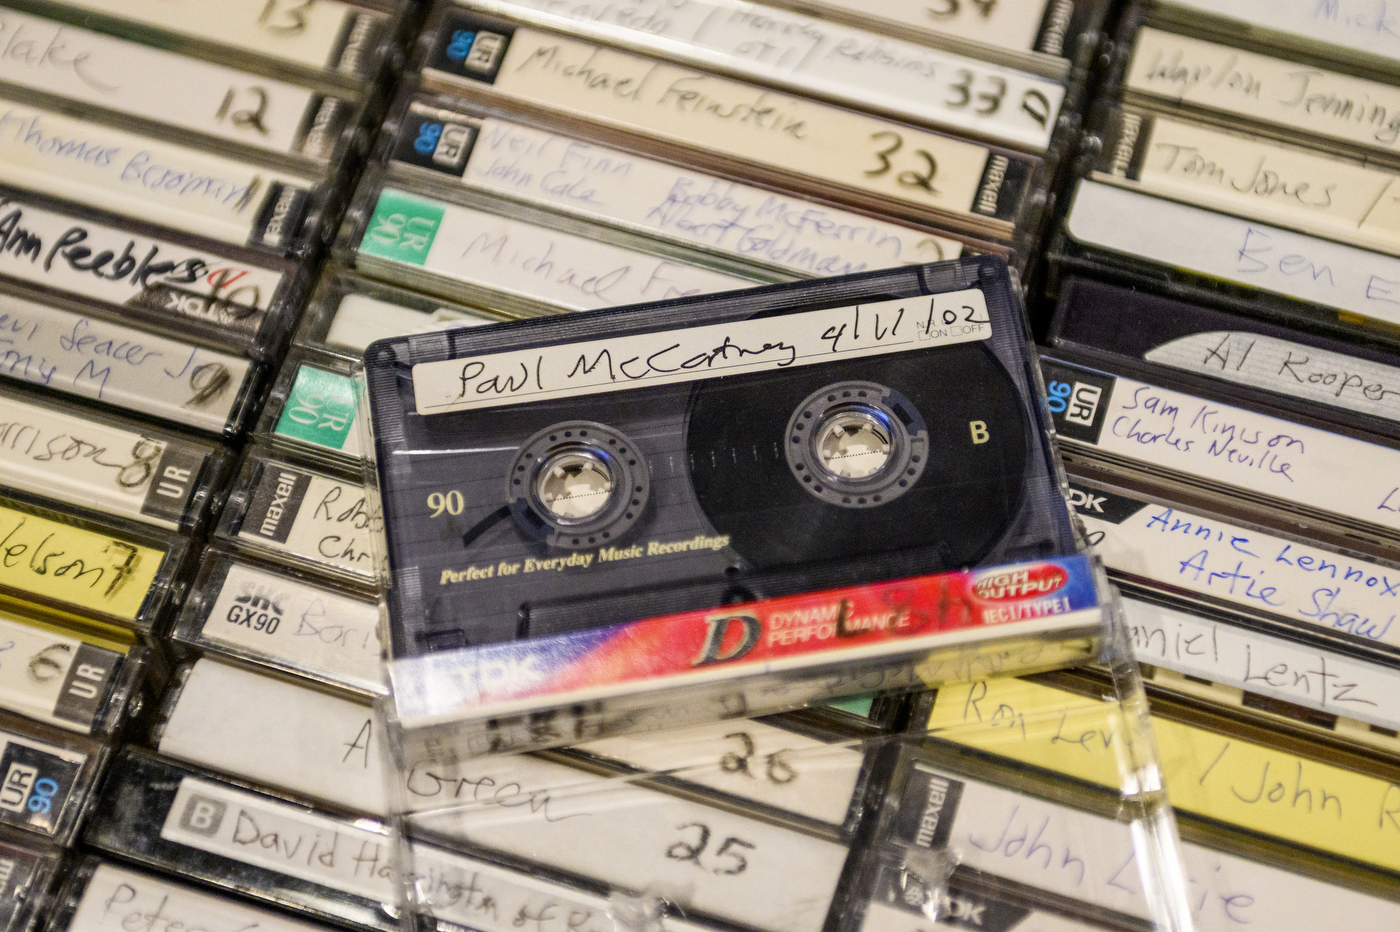 stacks of cassette tapes